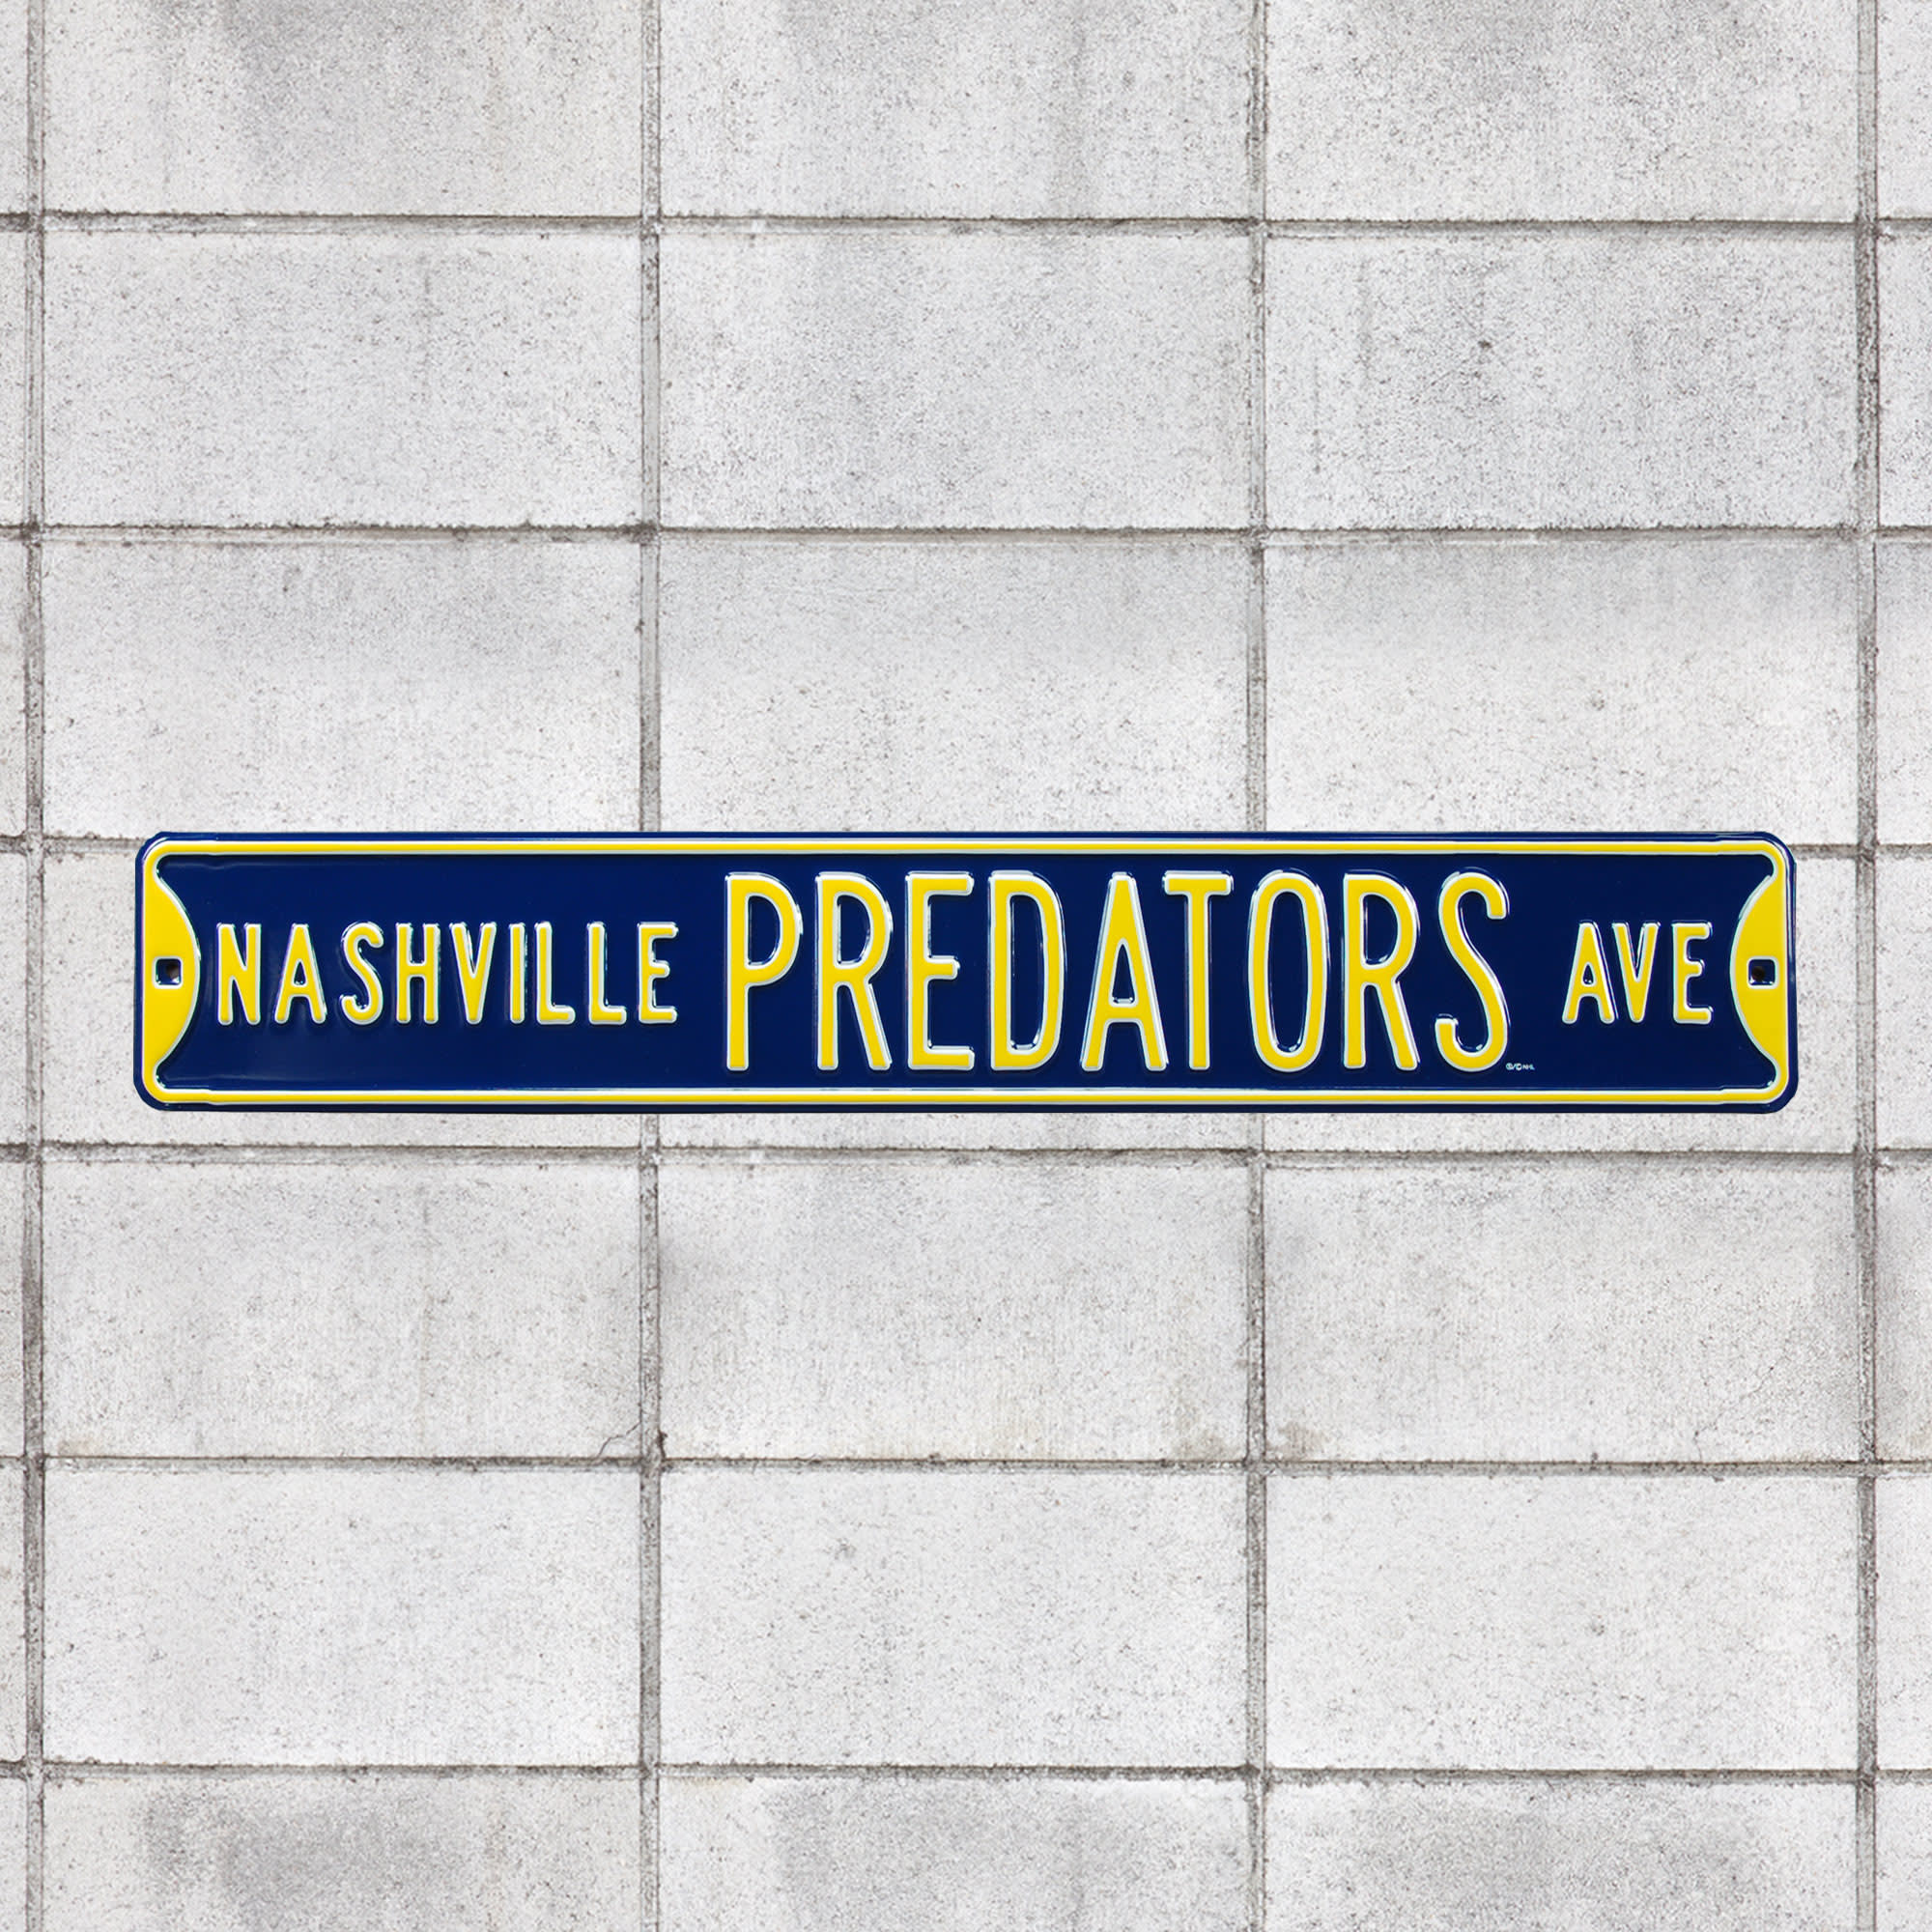 Nashville Predators: Nashville Predators Avenue - Officially Licensed NHL Metal Street Sign 36.0"W x 6.0"H by Fathead | 100% Ste